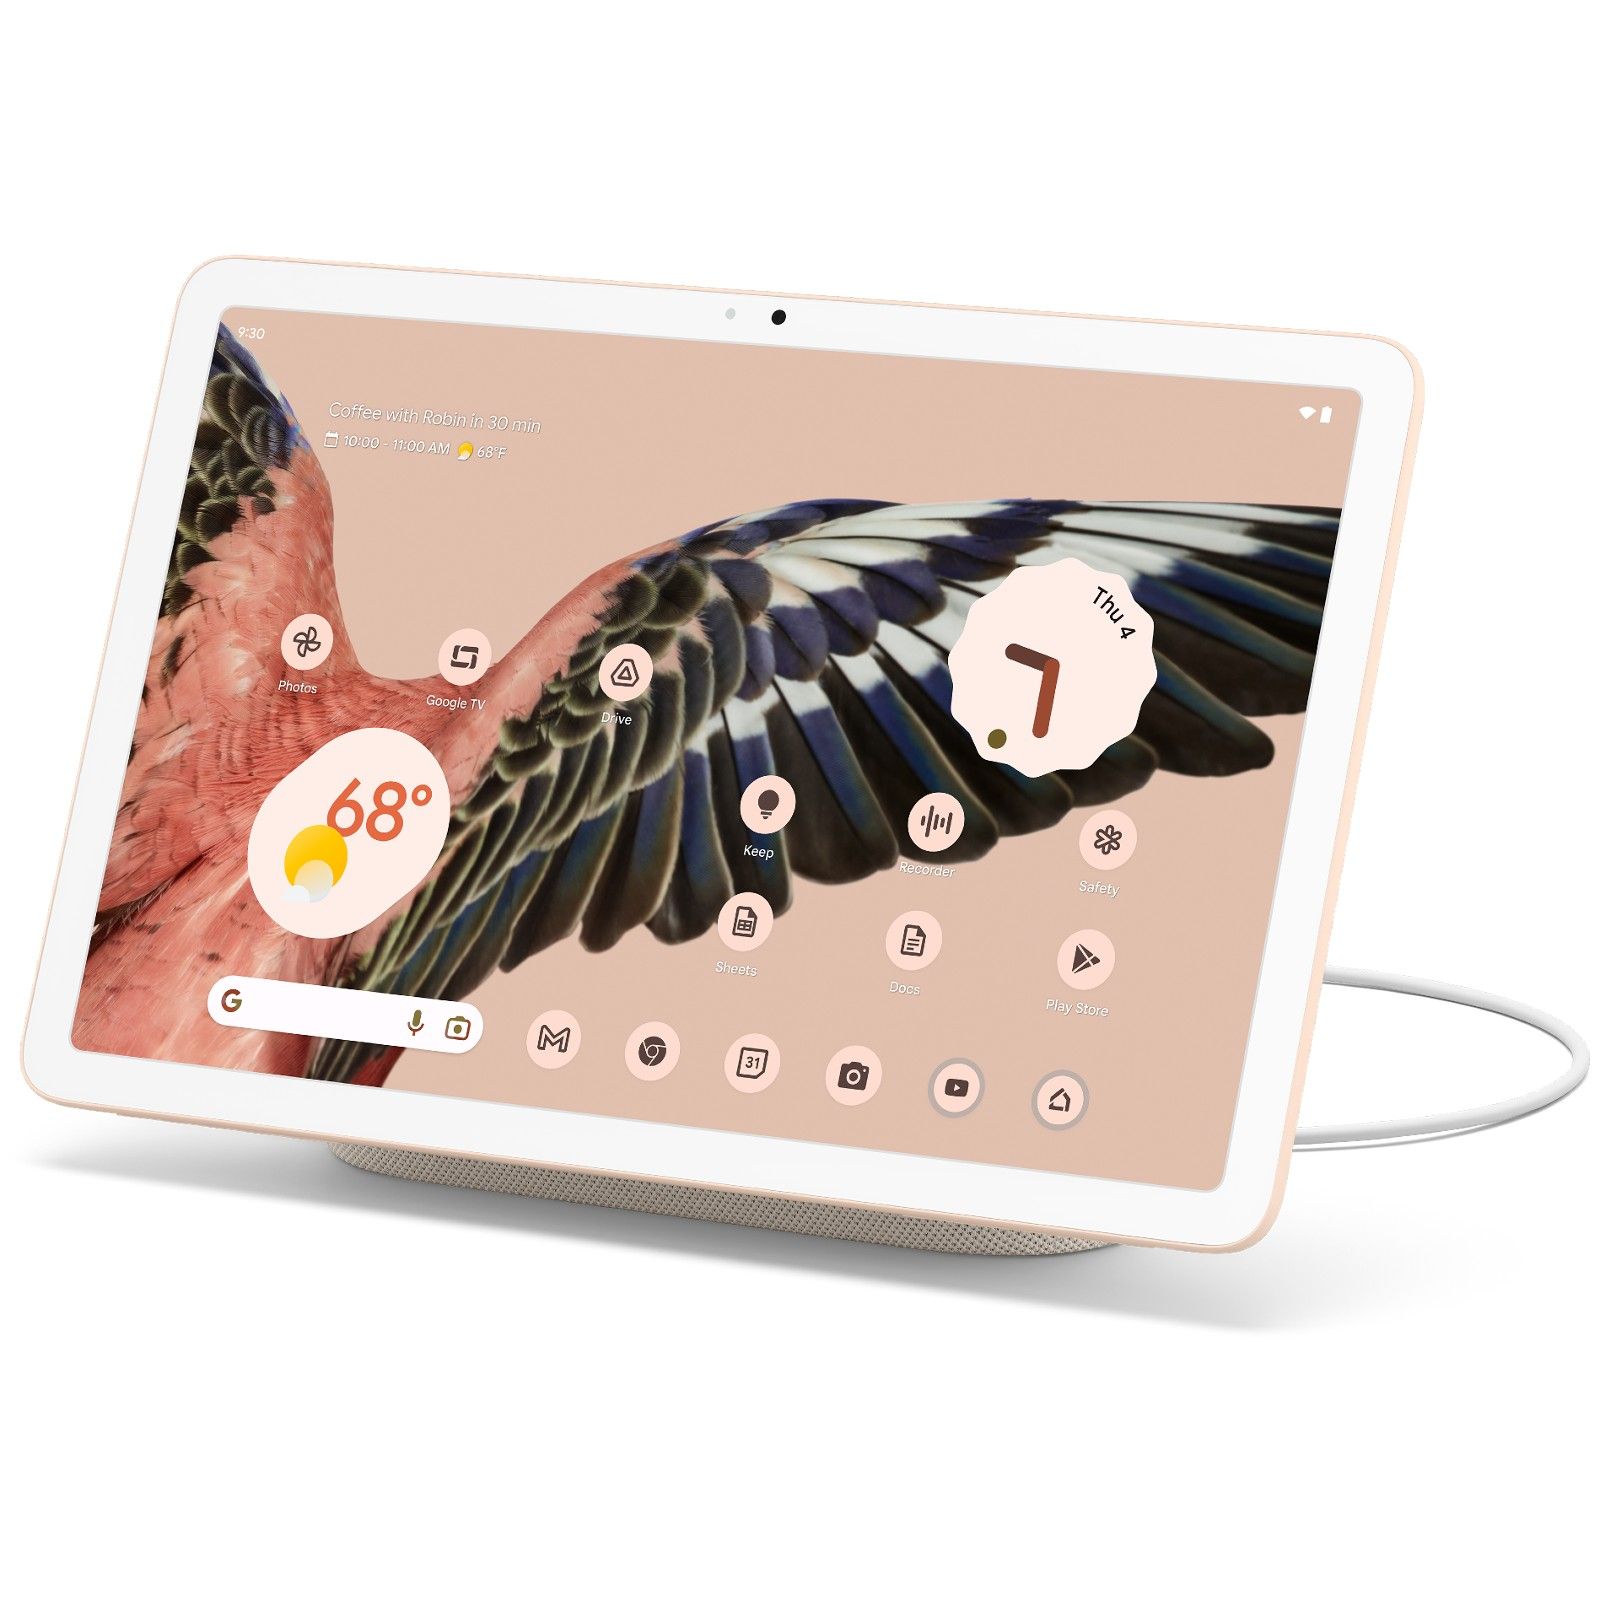 Apple iPad Mini 6th Gen: Prices, Colors, Sizes, Features & Specs